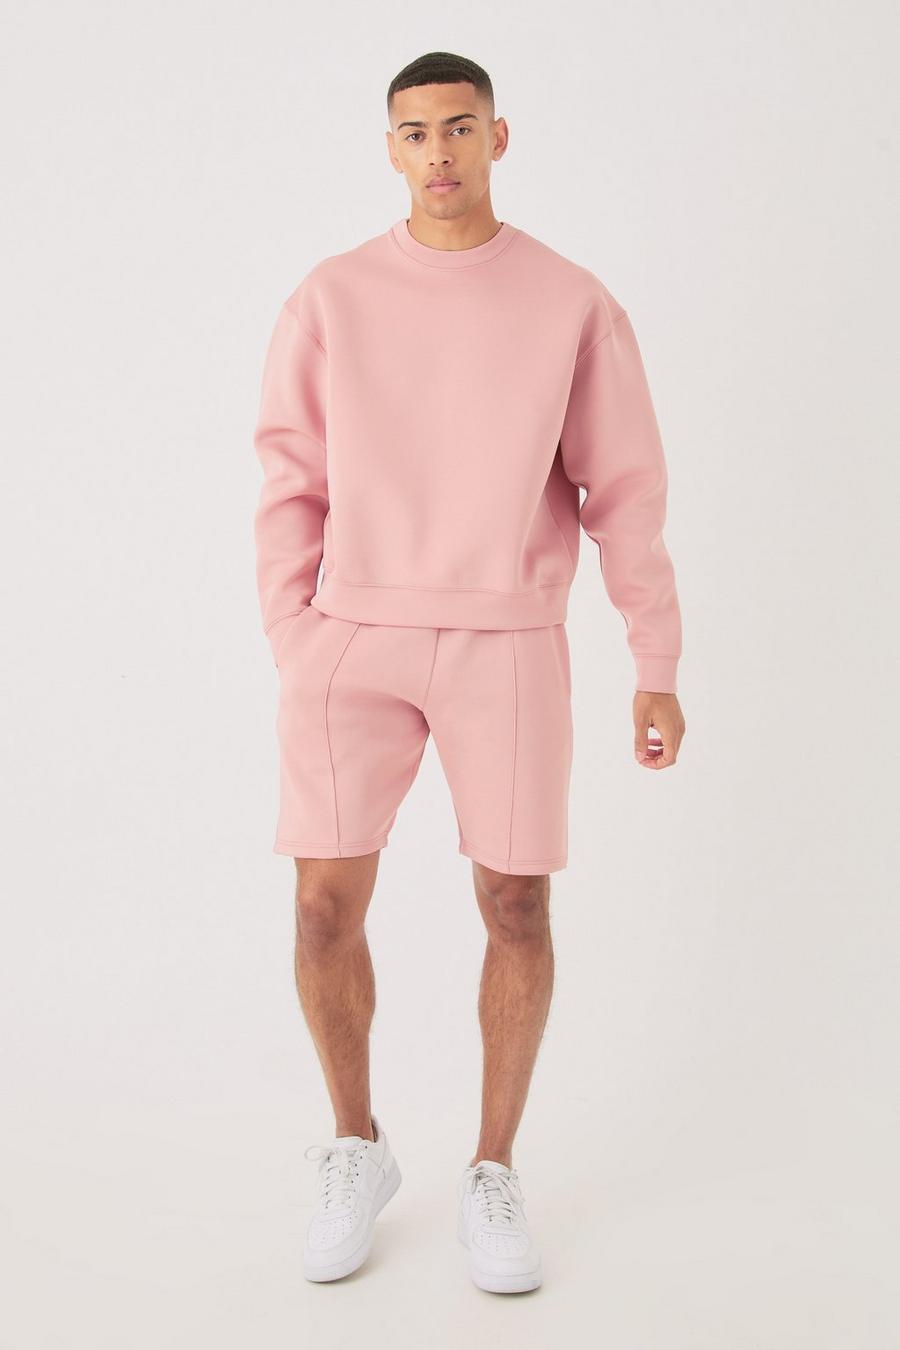 Kurzer kastiger Oversize Sweatshirt-Trainingsanzug, Dusty pink